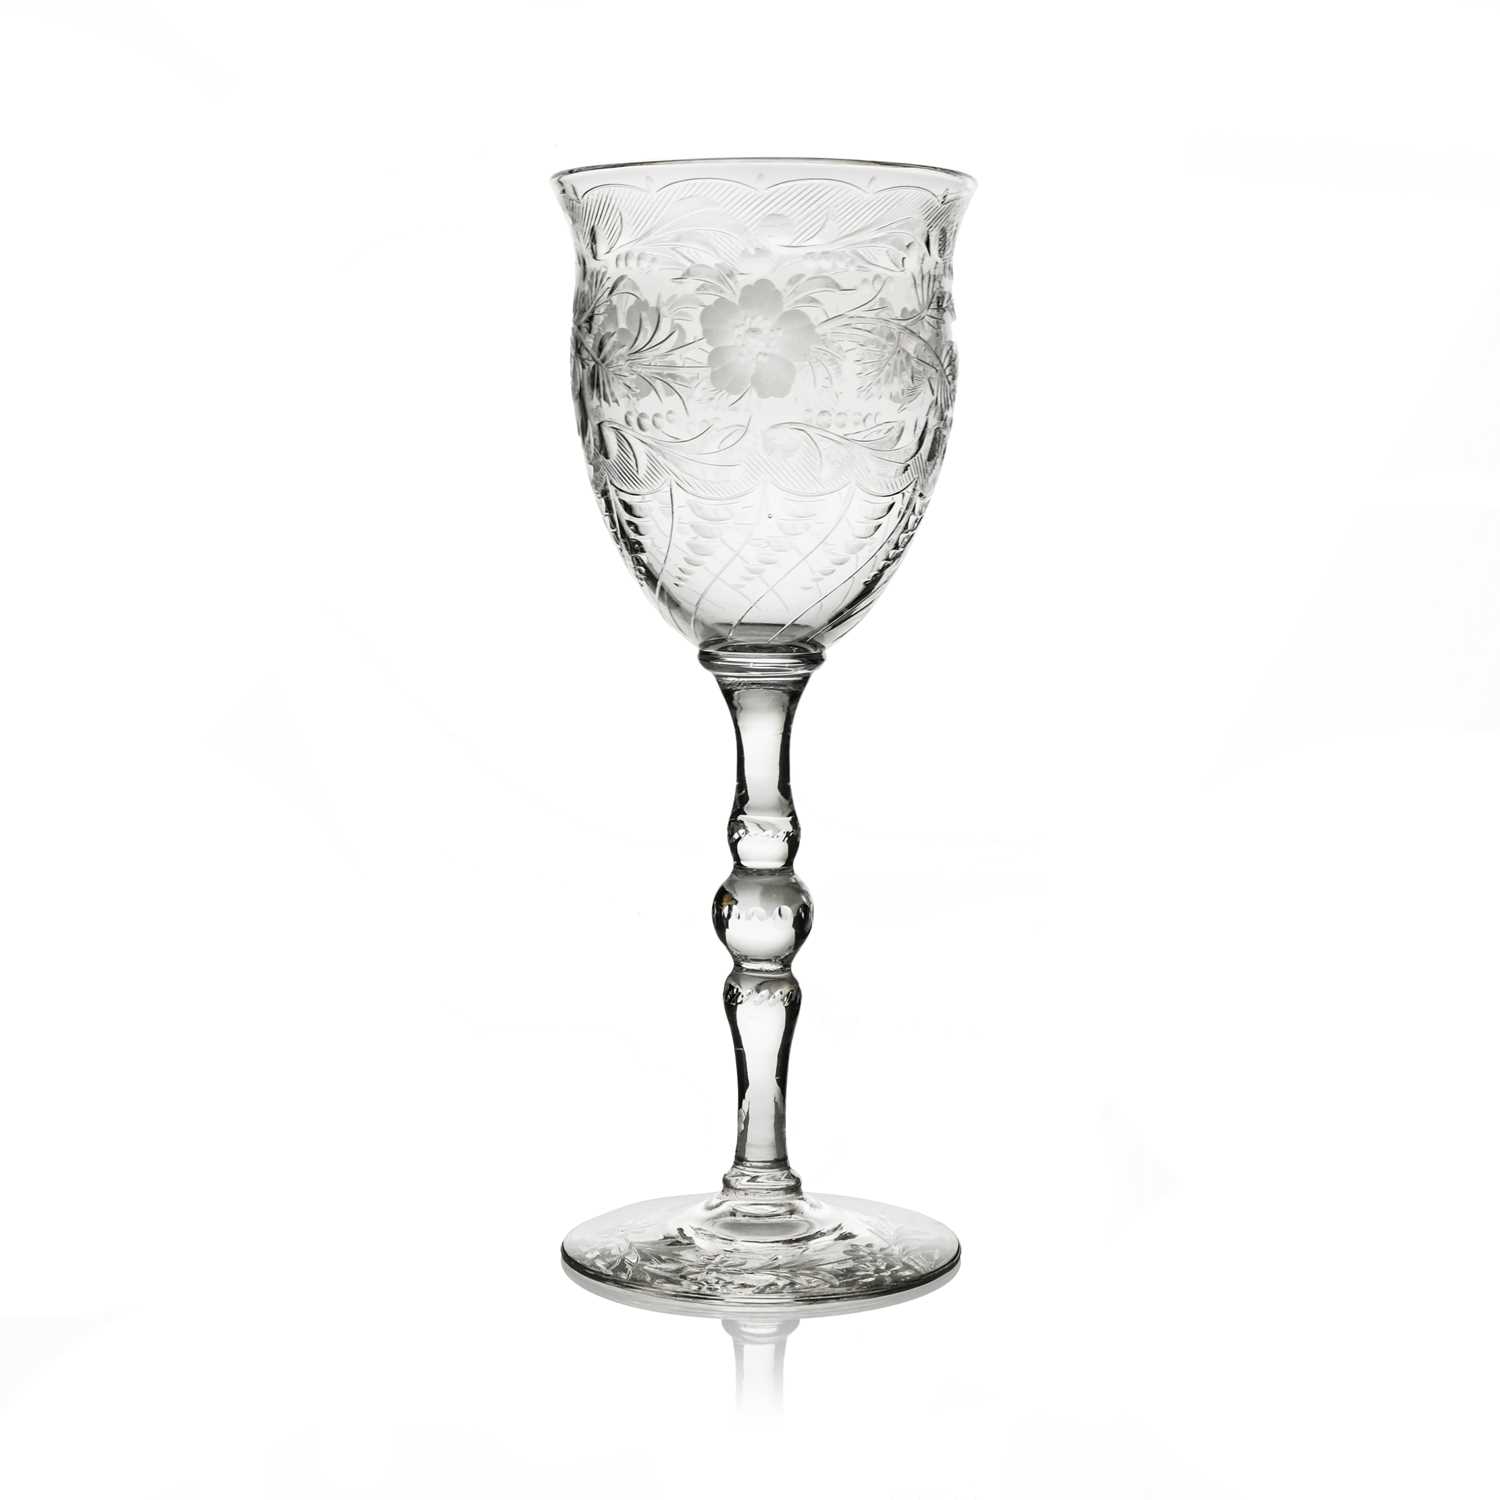 Stevens and Williams, an Edwardian Stourbridge intaglio cut hock wine glass, circa 1905, the